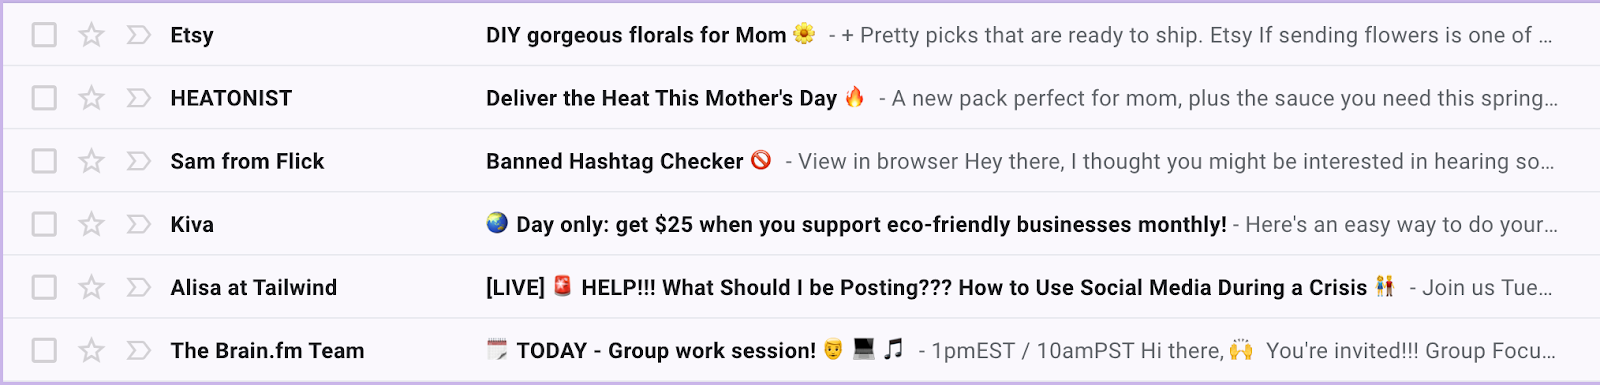 Email marketing using emoji